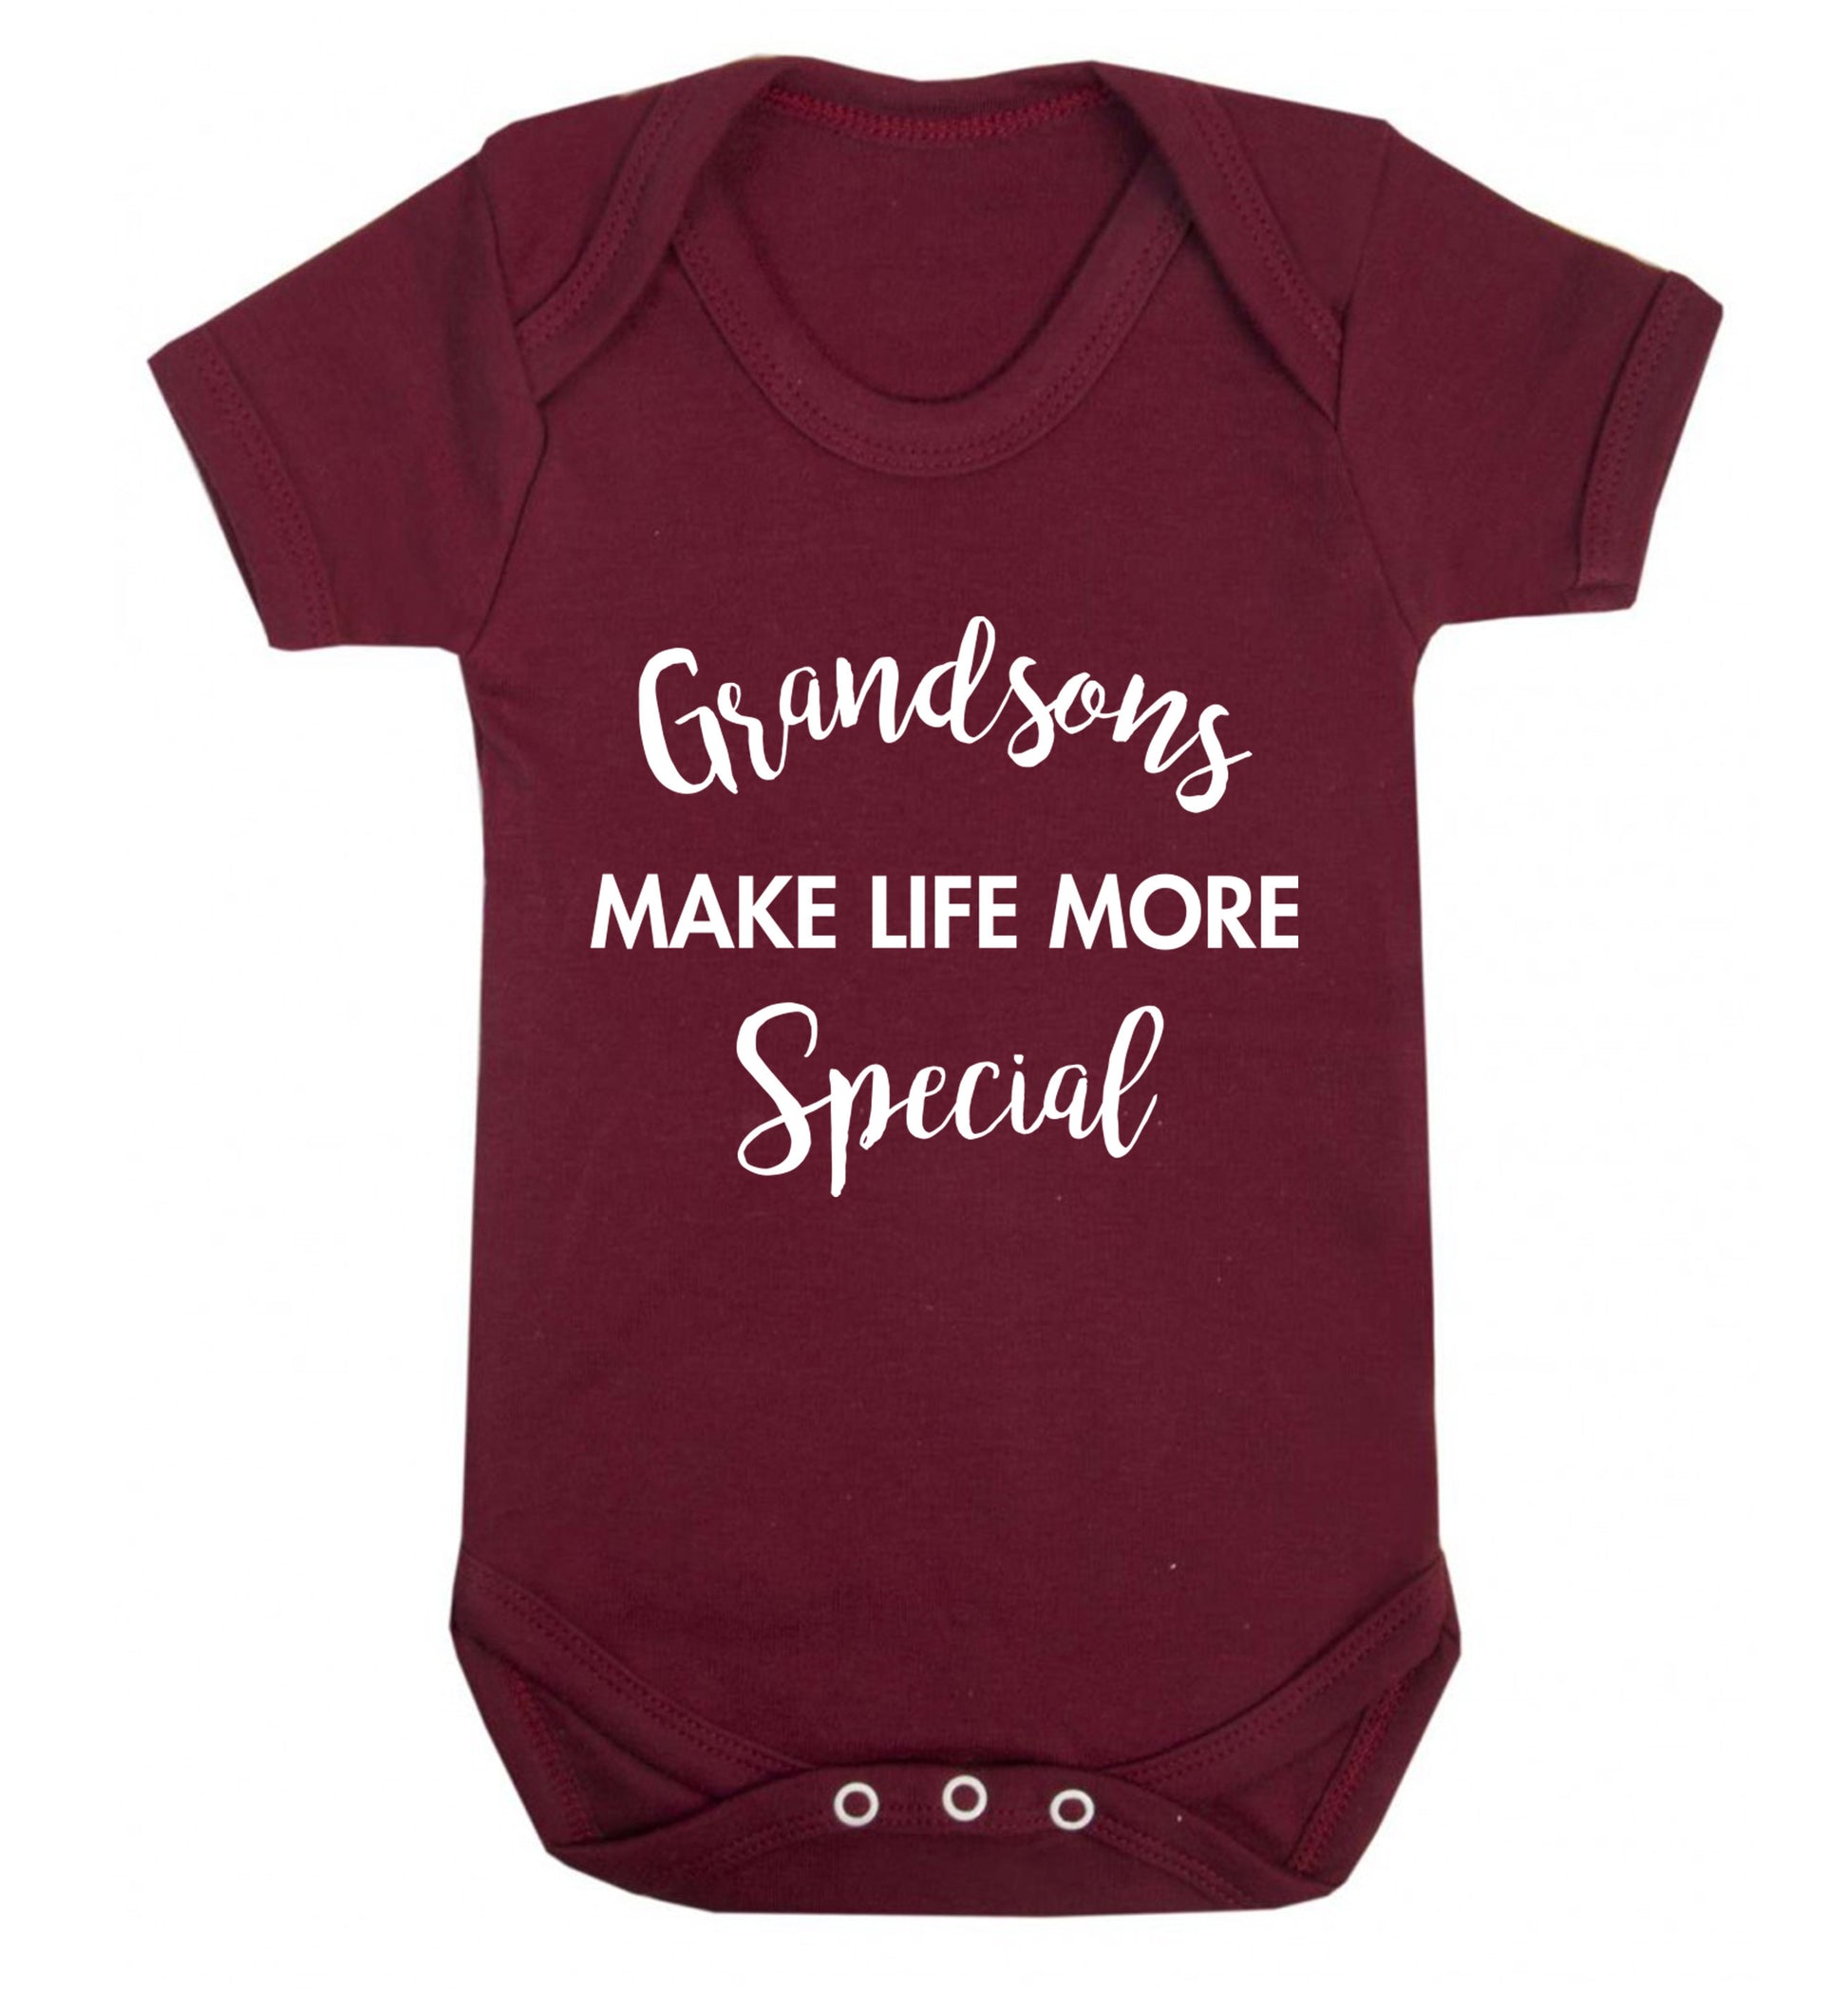 Grandsons make life more special Baby Vest maroon 18-24 months